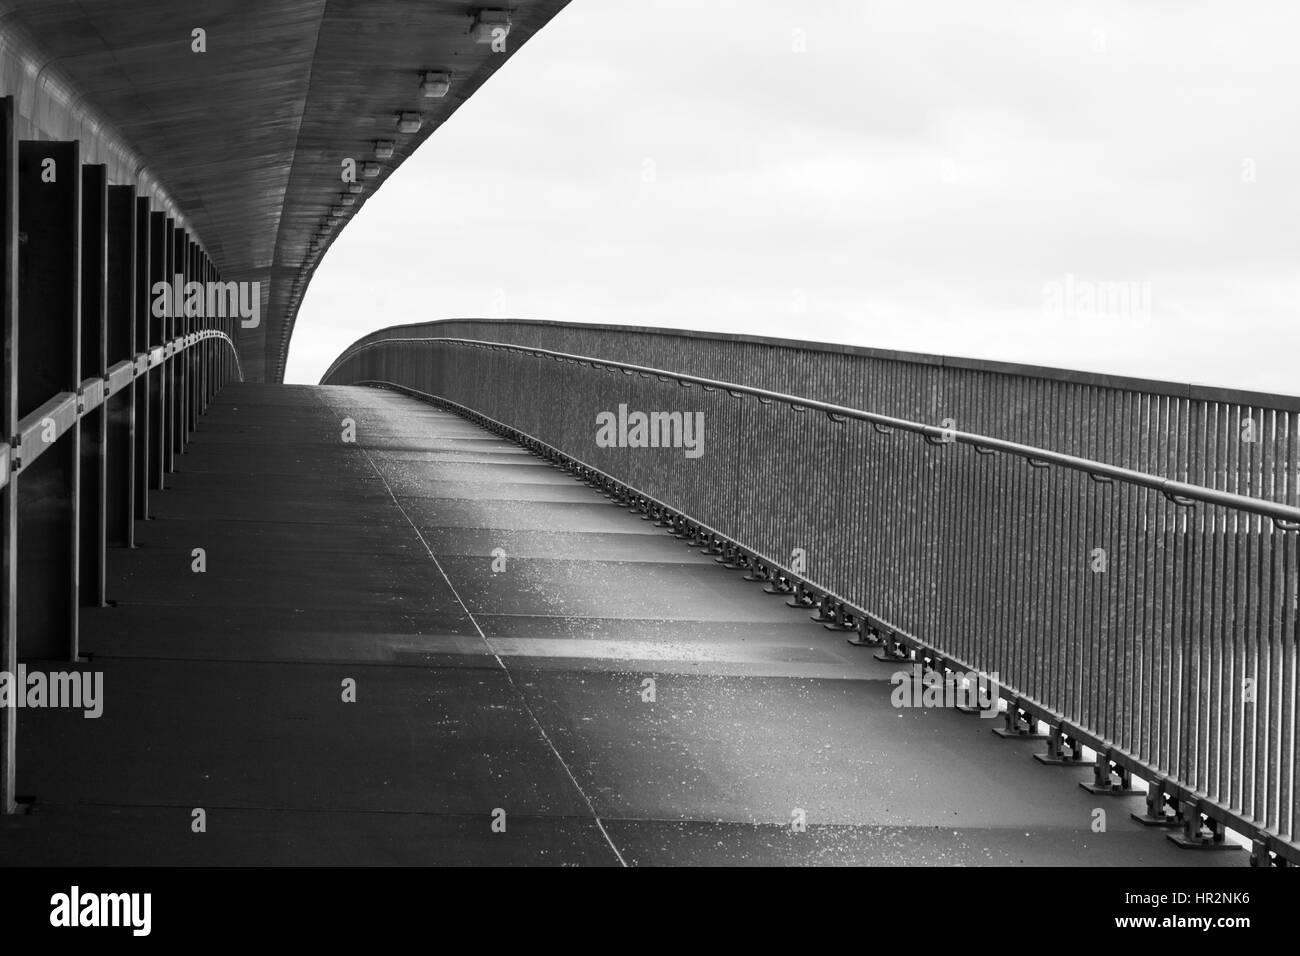 Abstraktes Bild der Betonbrücke mit Fußgängersteg Stockfoto